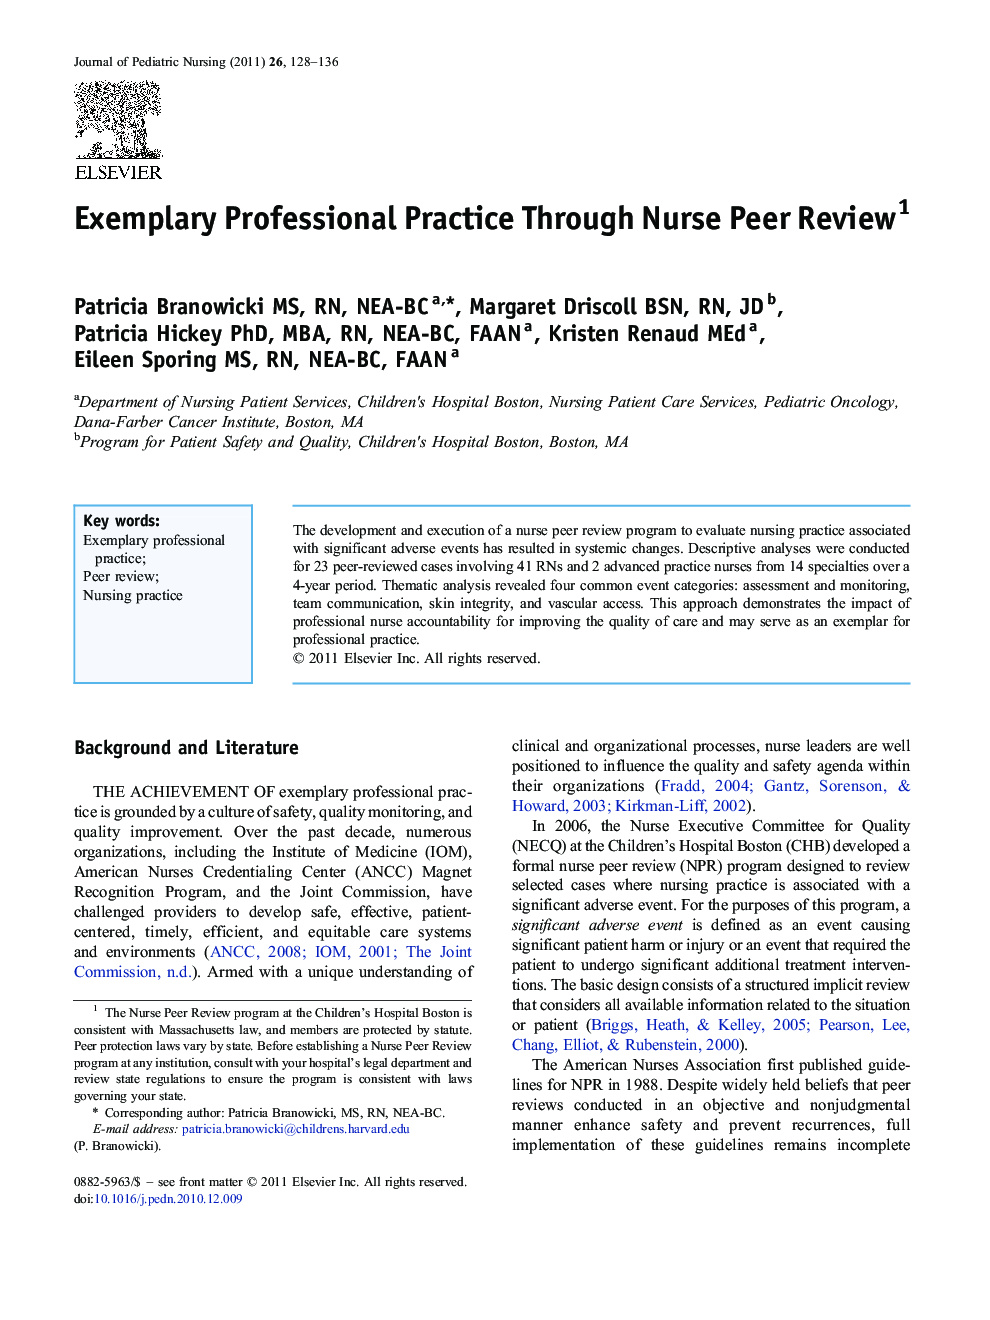 Exemplary Professional Practice Through Nurse Peer Review 1